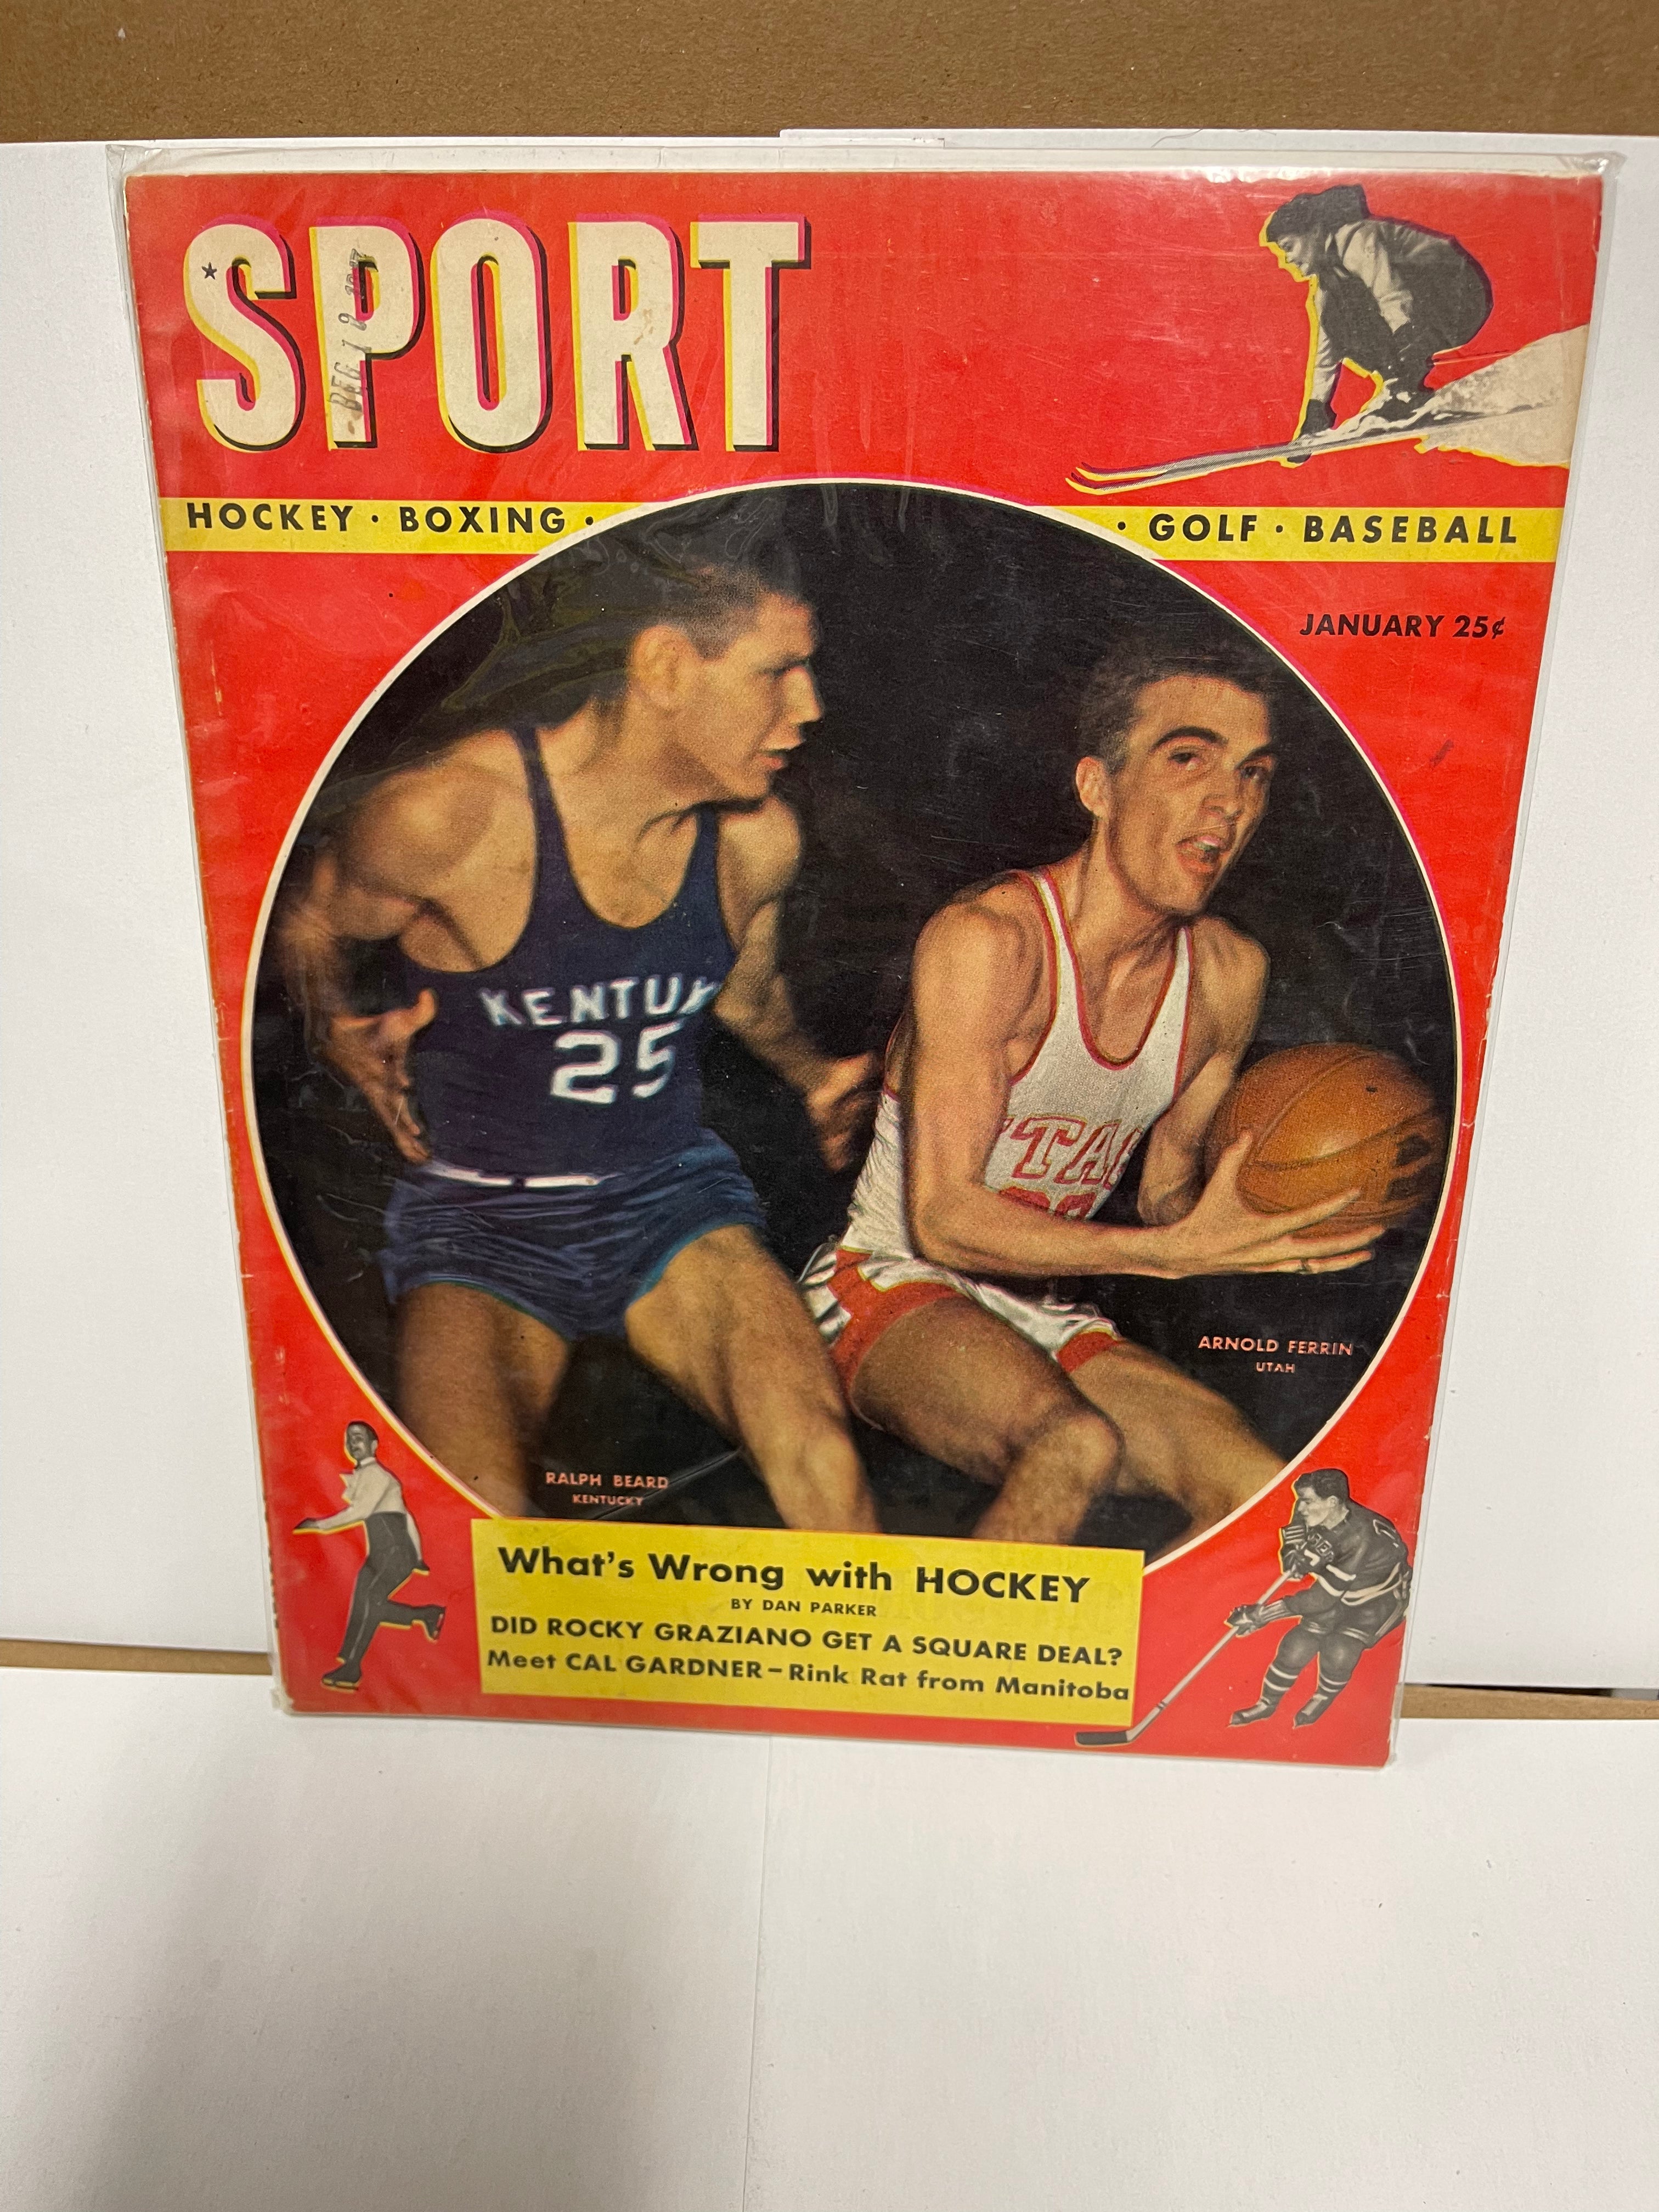 Sport magazine, February, 1948